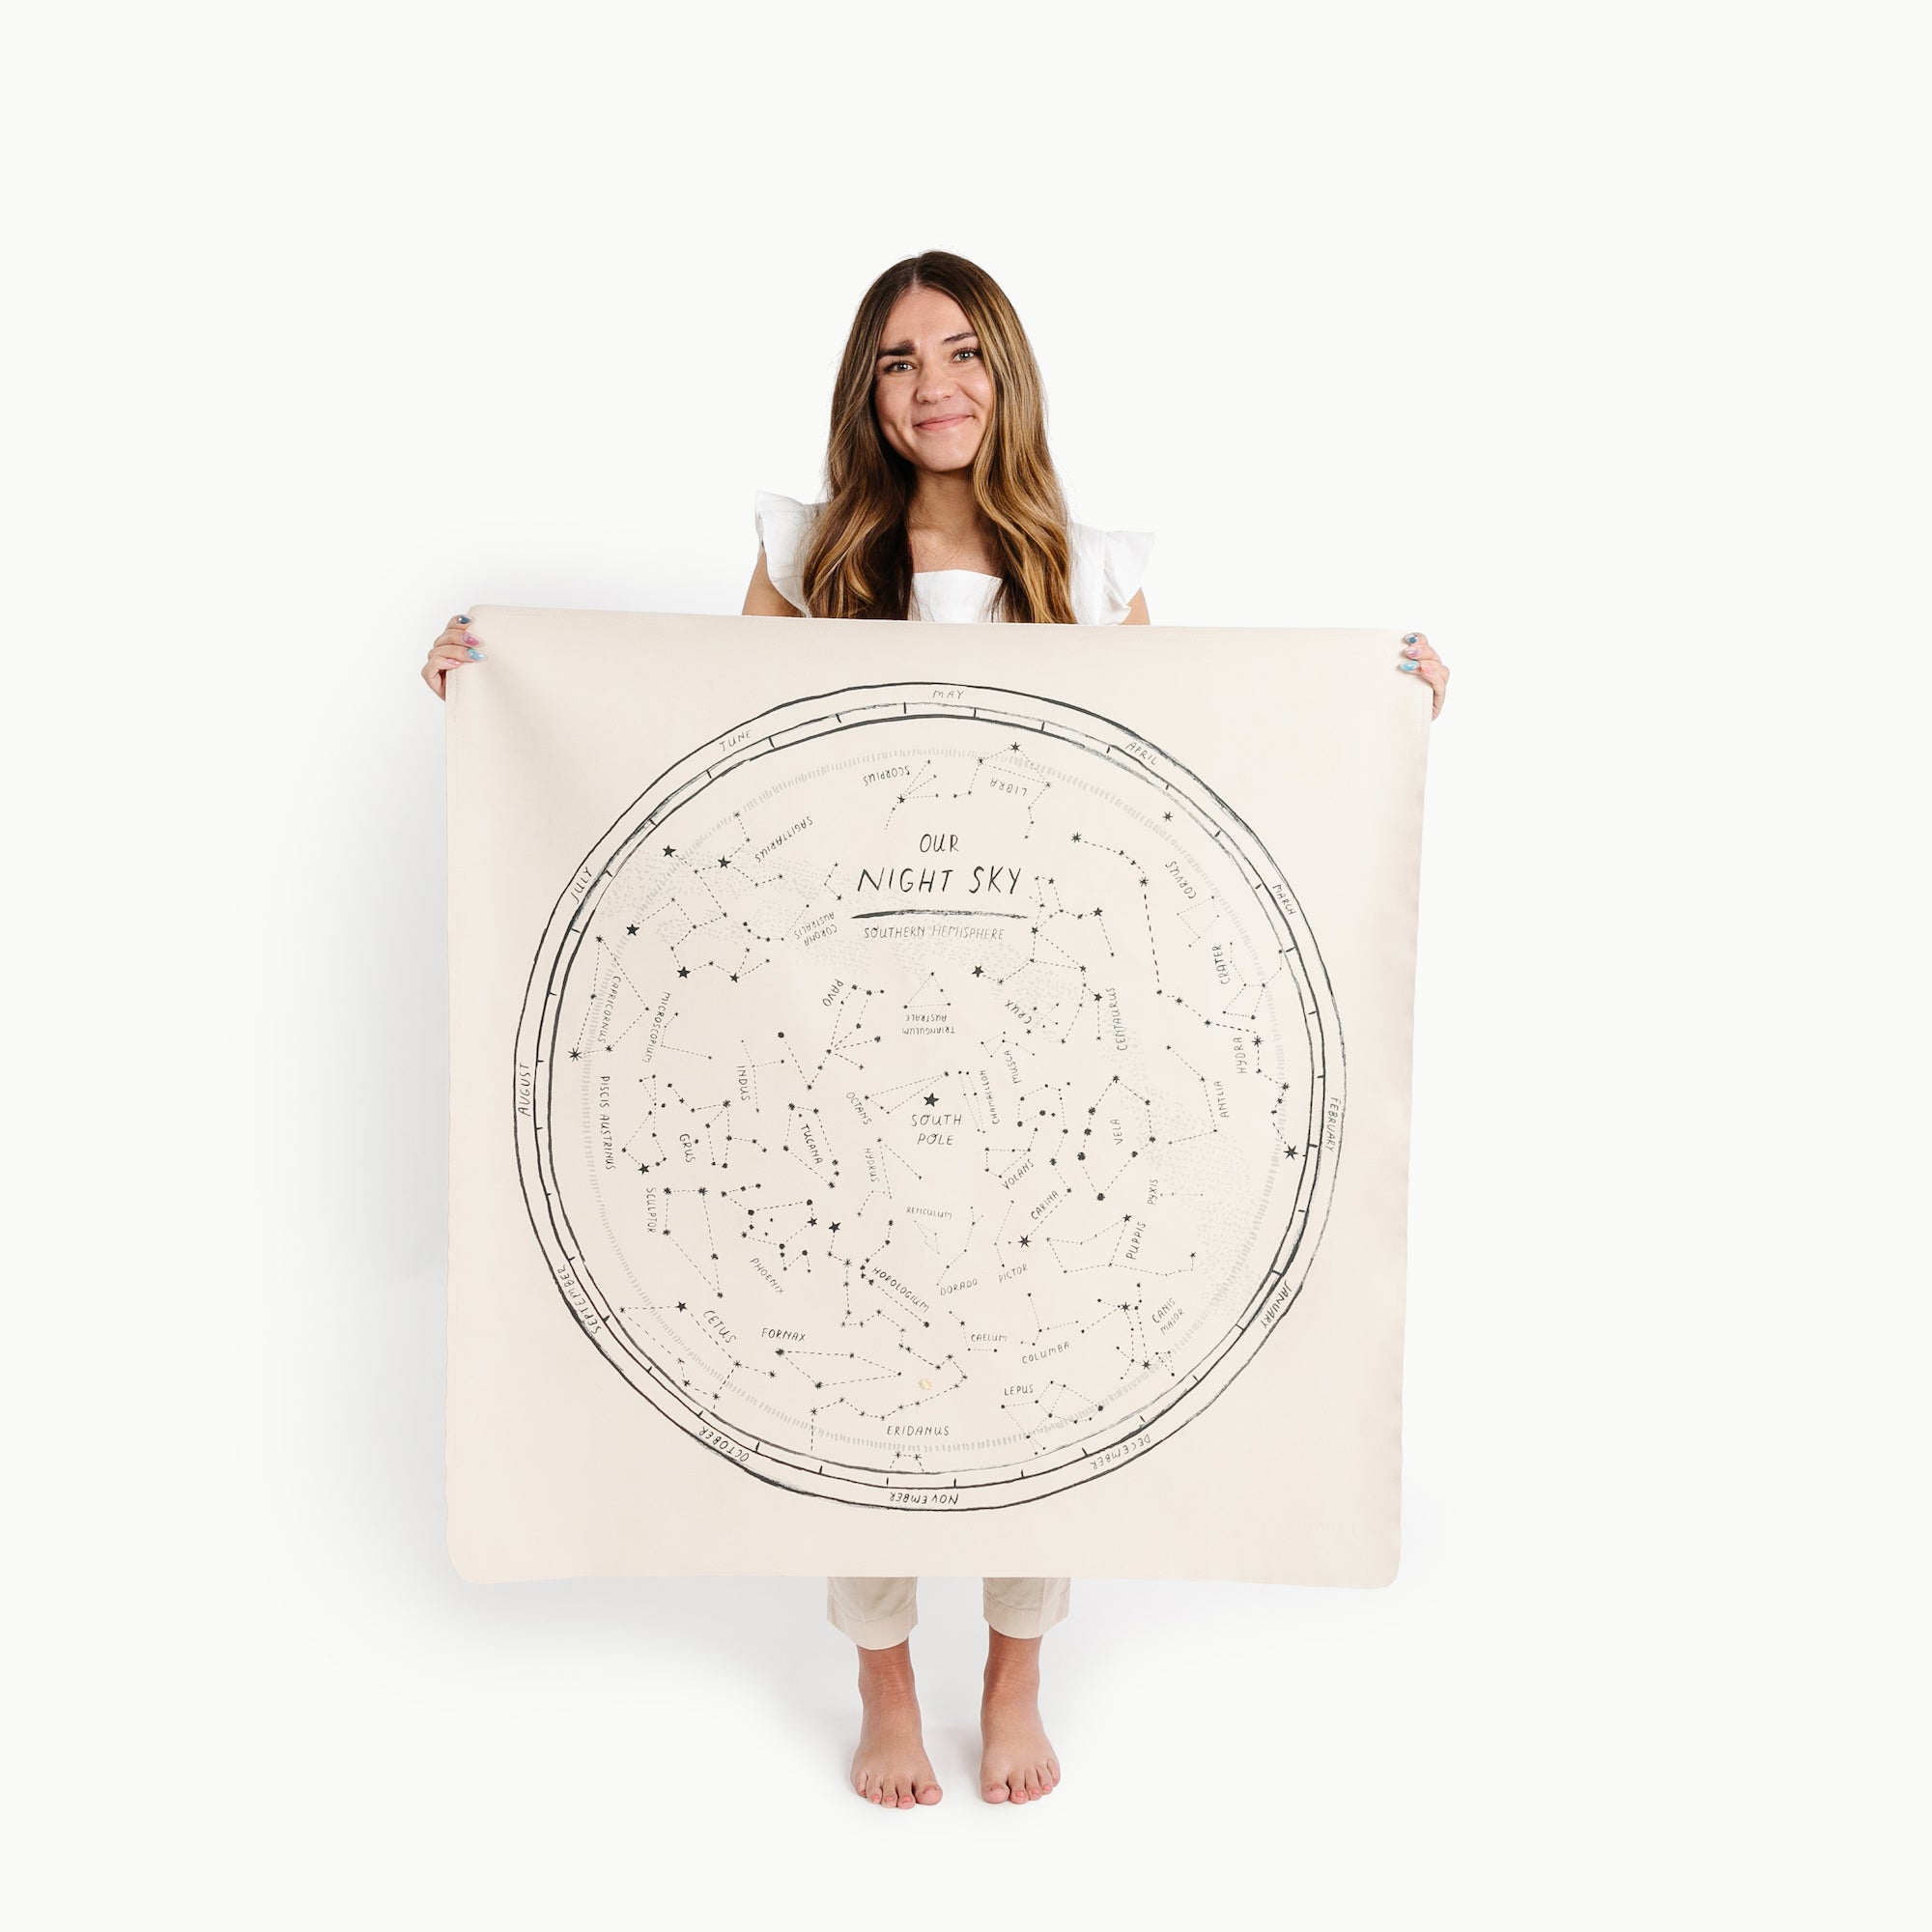 Constellation - Southern Hemisphere@woman holding the constellation - southern hemisphere mini mat